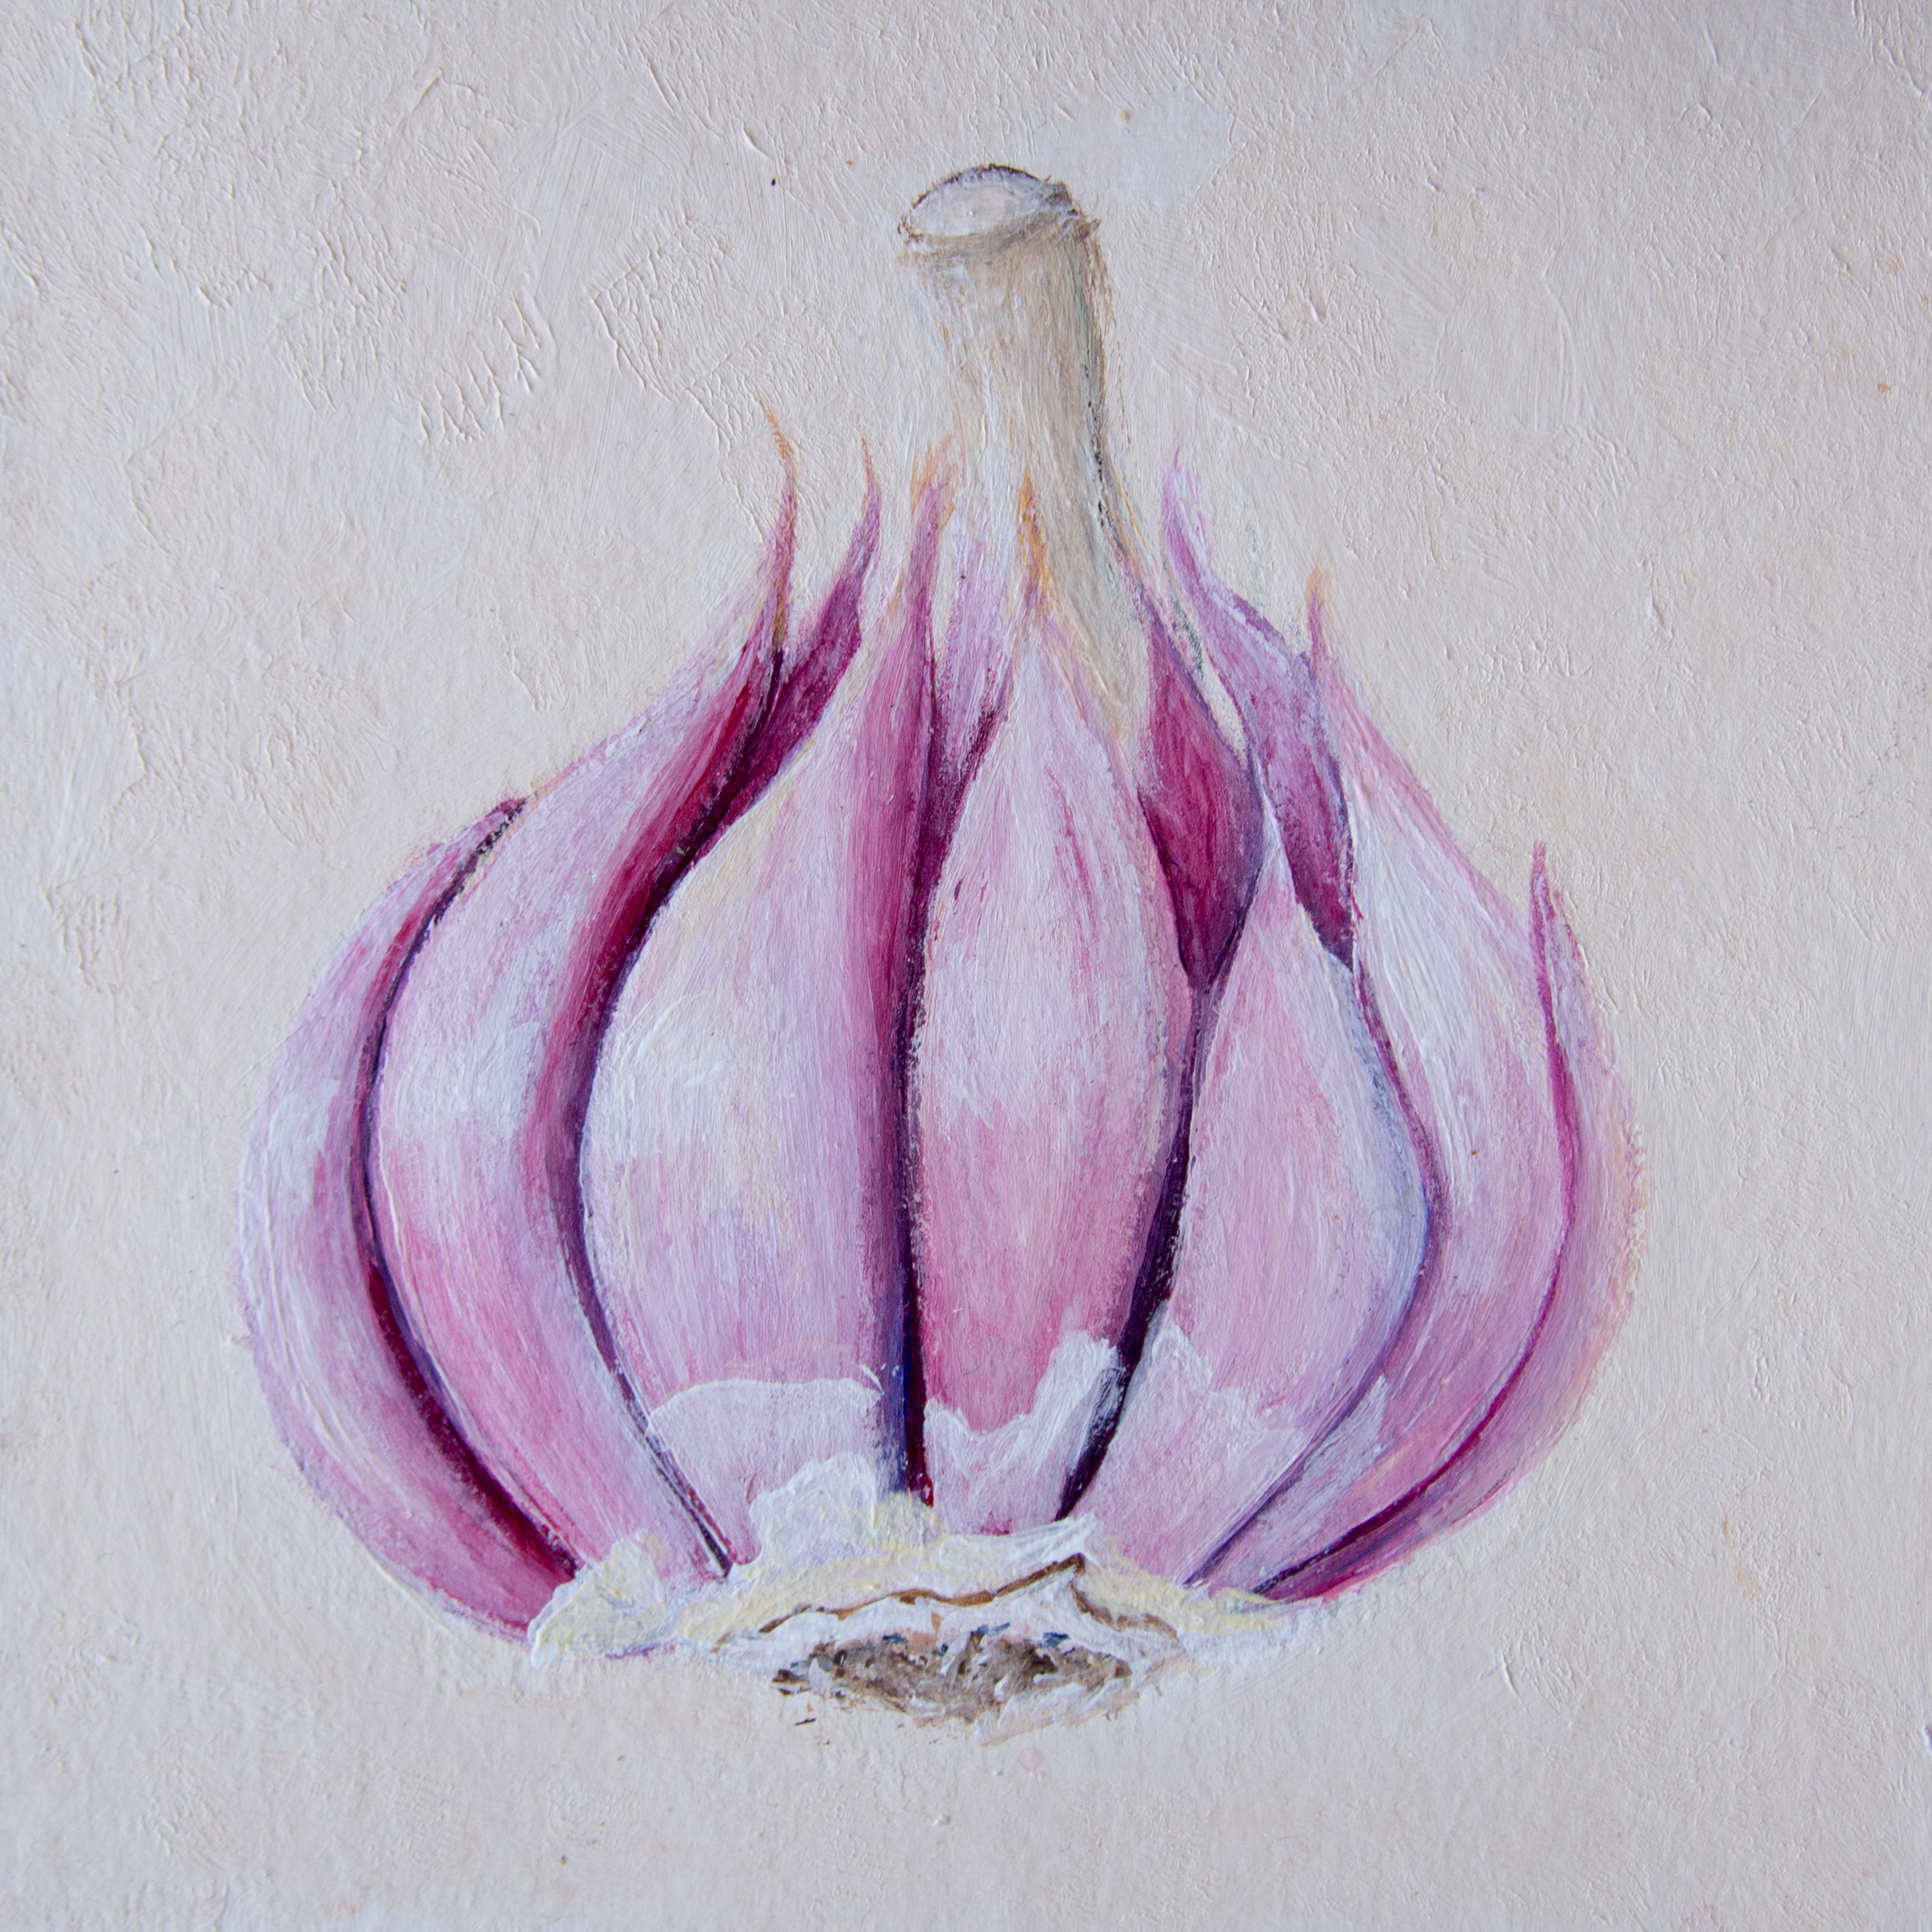 Acrylic painting of a garlic photo